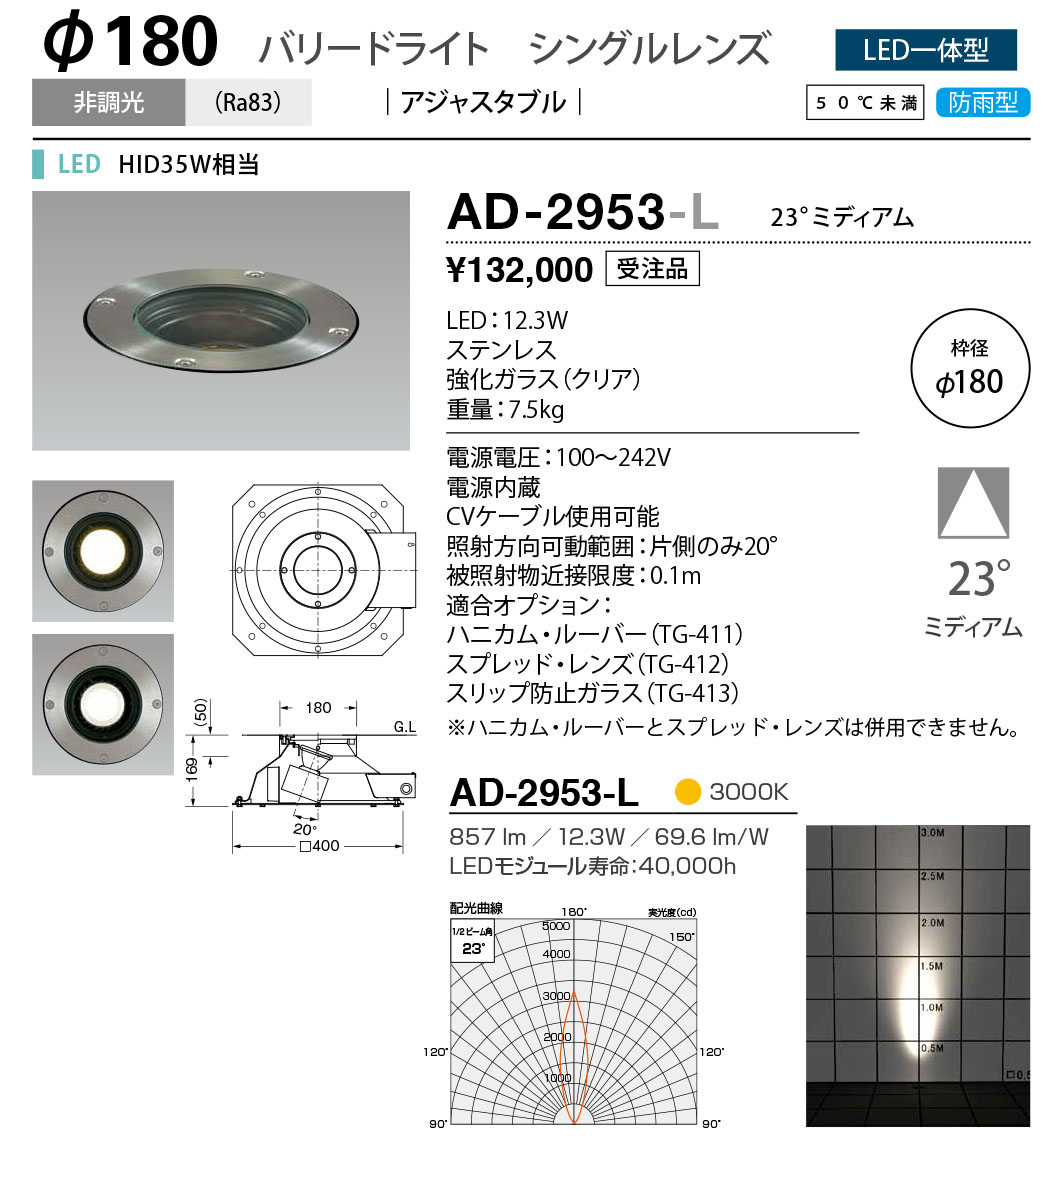 AD-2953-L(山田照明) 商品詳細 ～ 照明器具・換気扇他、電設資材販売のブライト